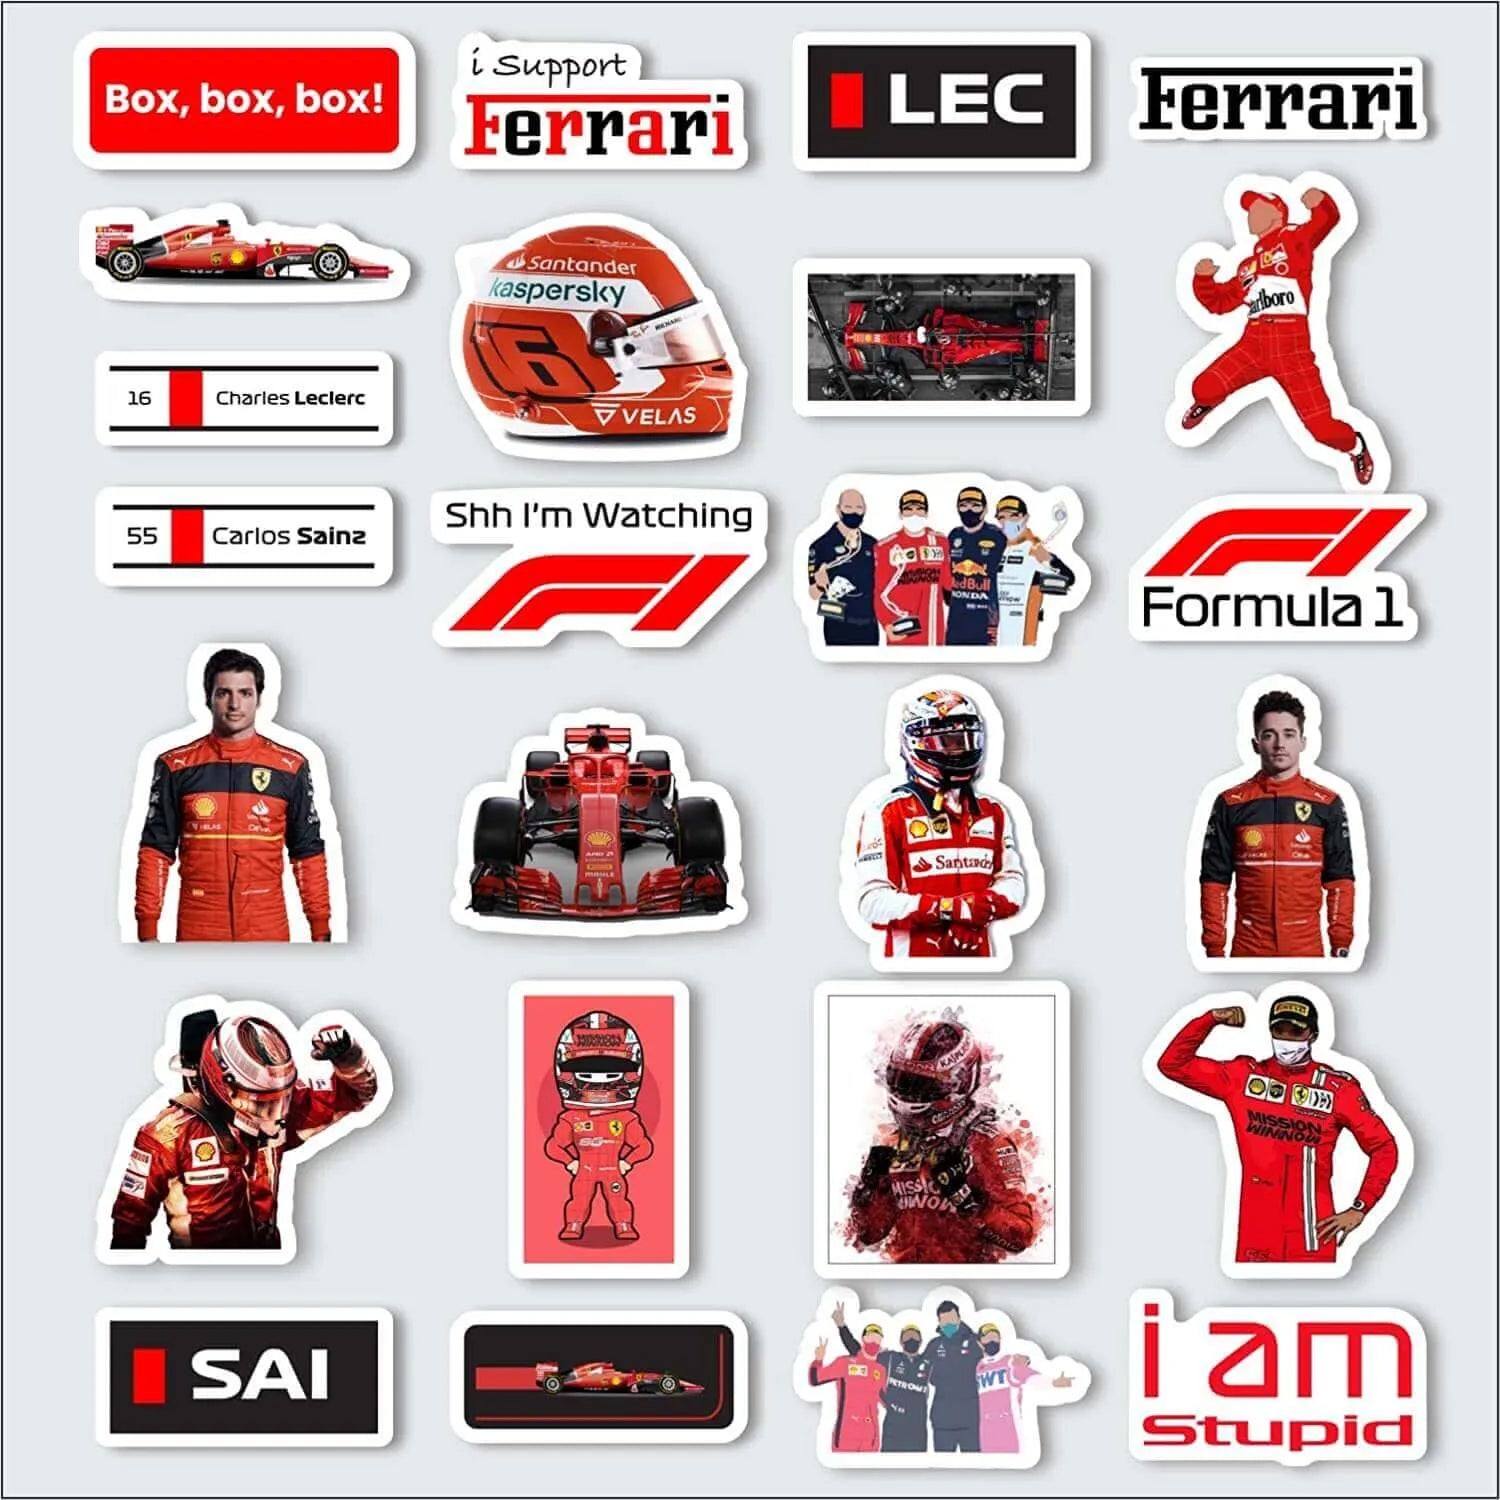 F1 Ferrari Laptop Stickers